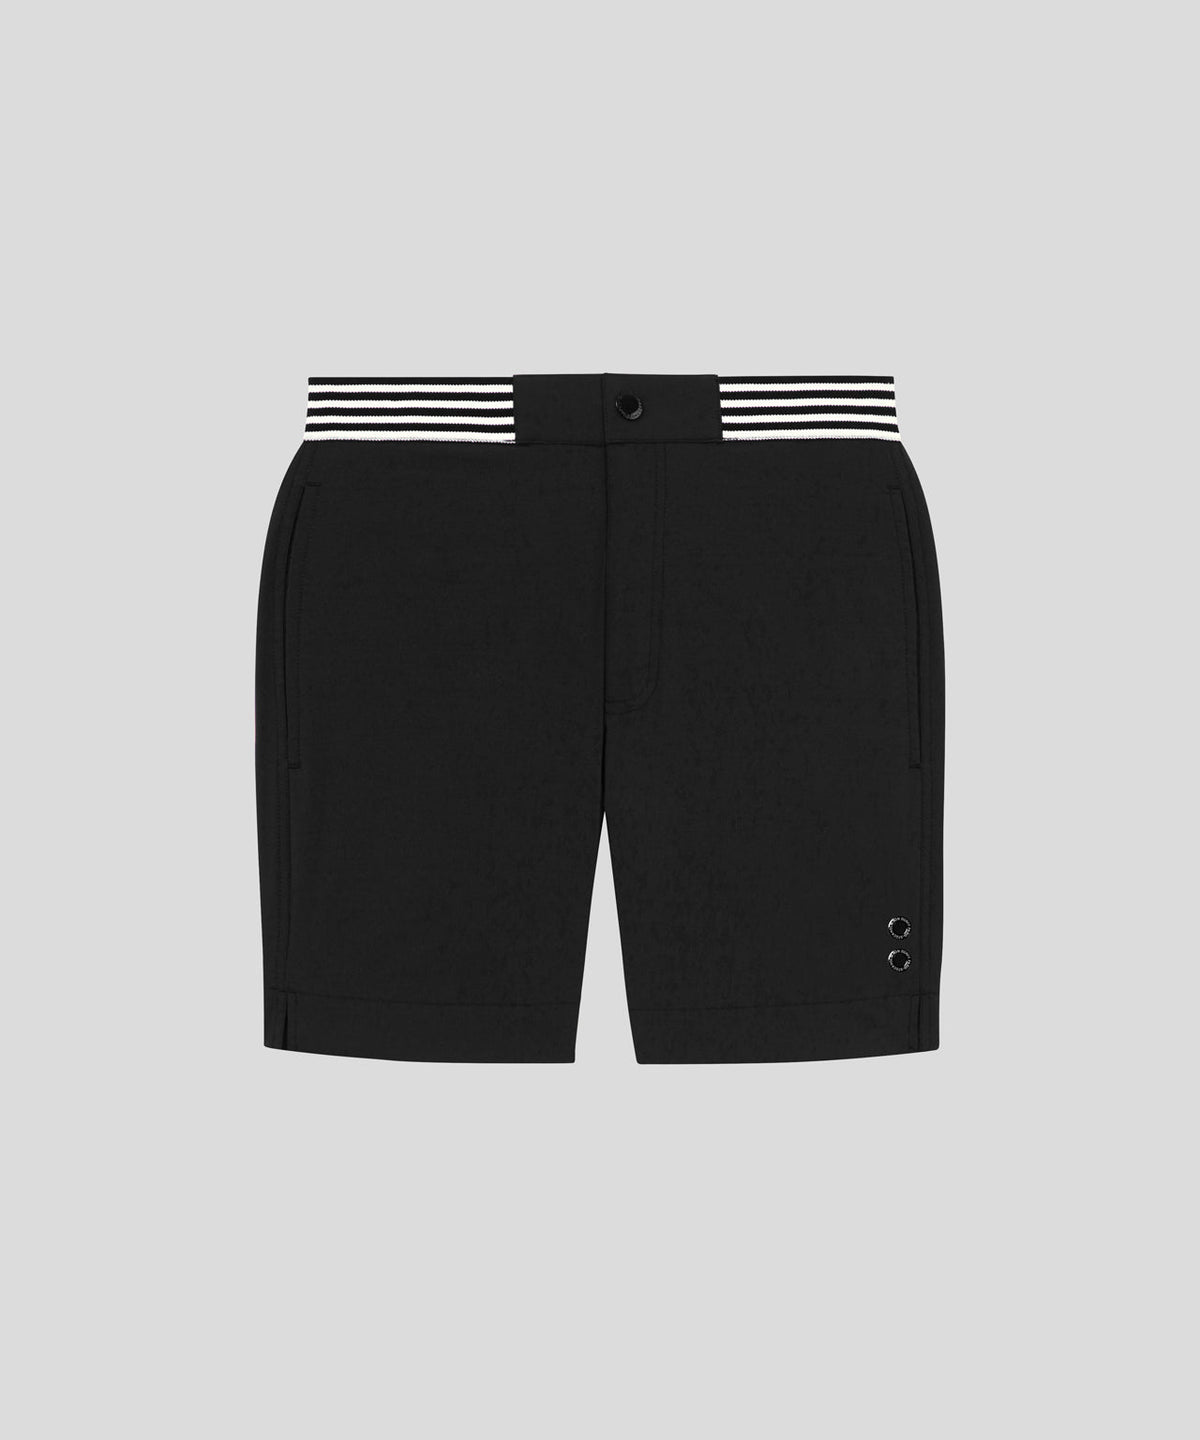 Urban Swim Shorts: Black